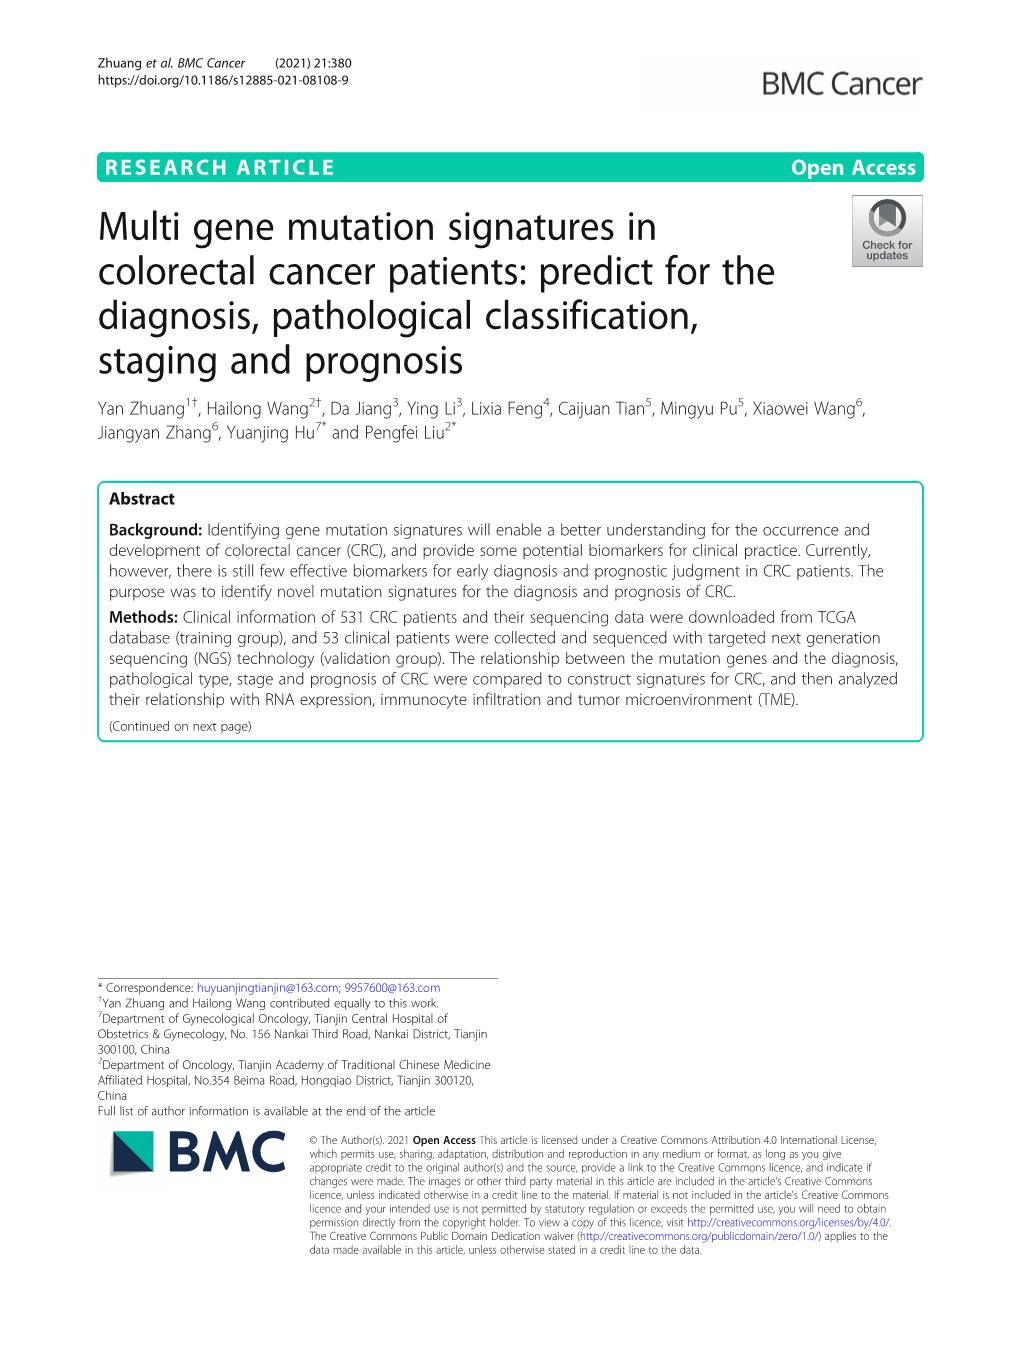 Multi Gene Mutation Signatures in Colorectal Cancer